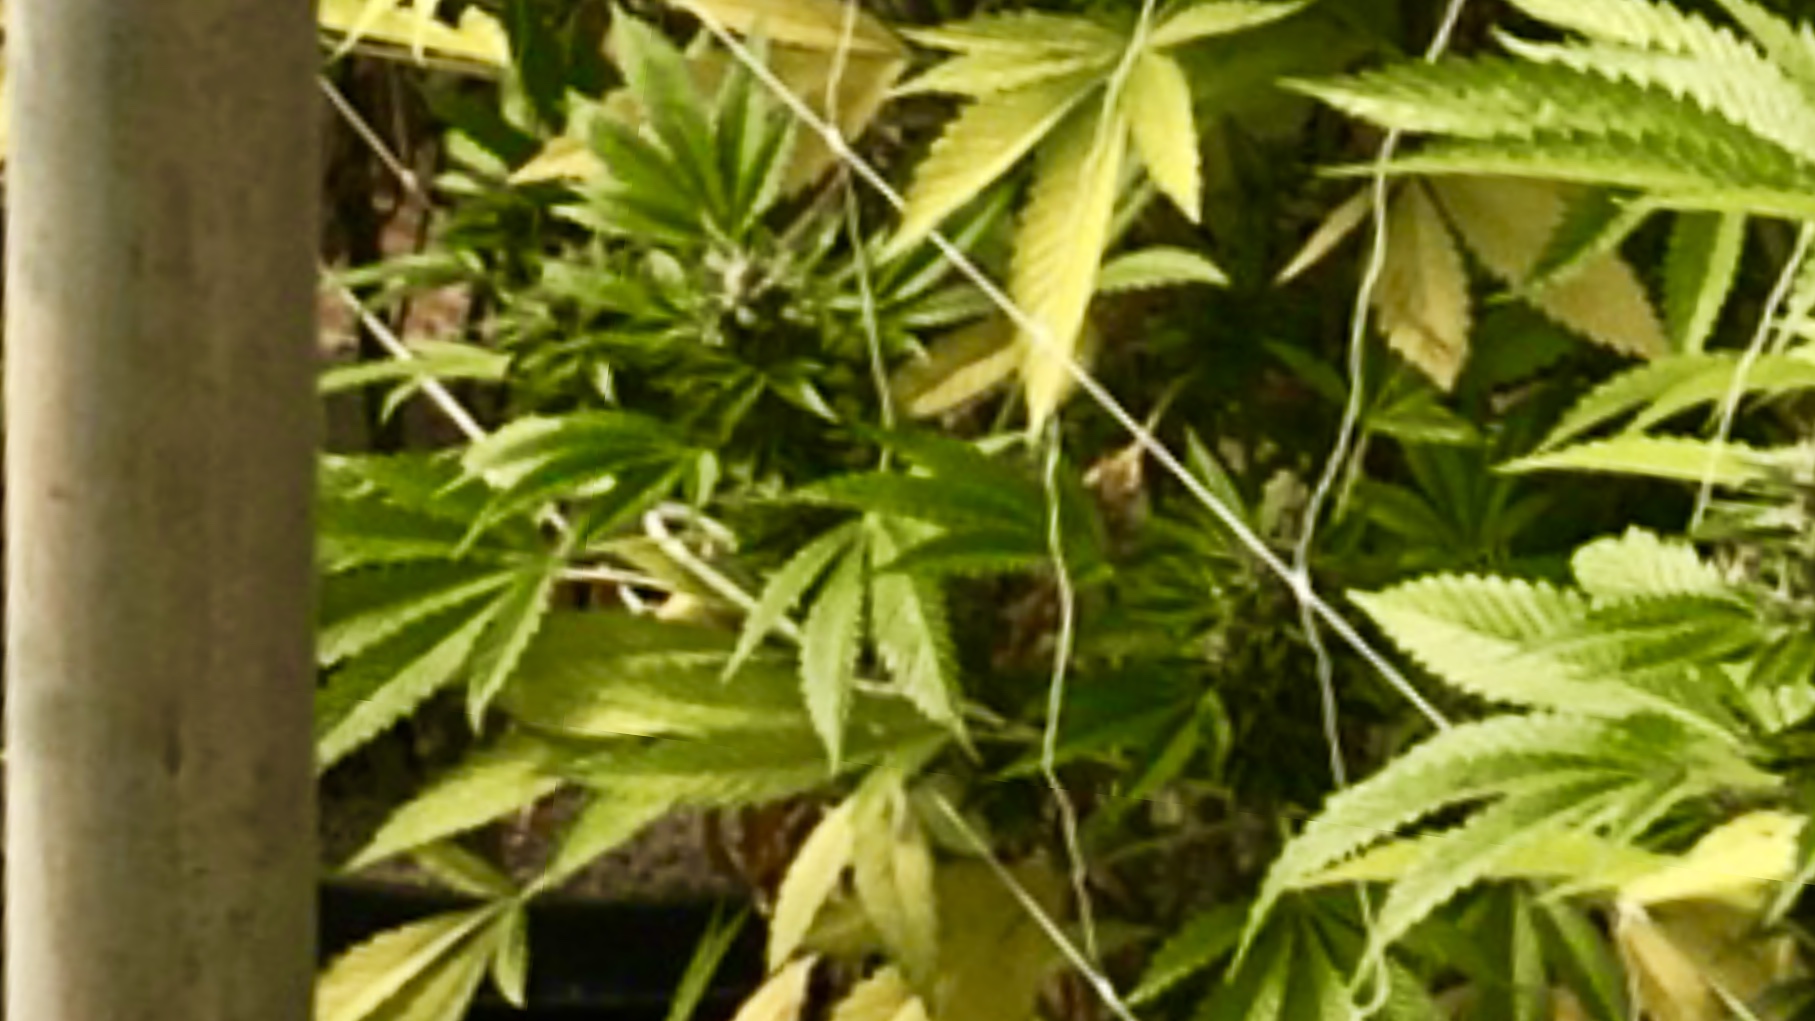 Santa Barbara County approves “gargantuan” cannabis “grow” for the Sta. Rita Hills